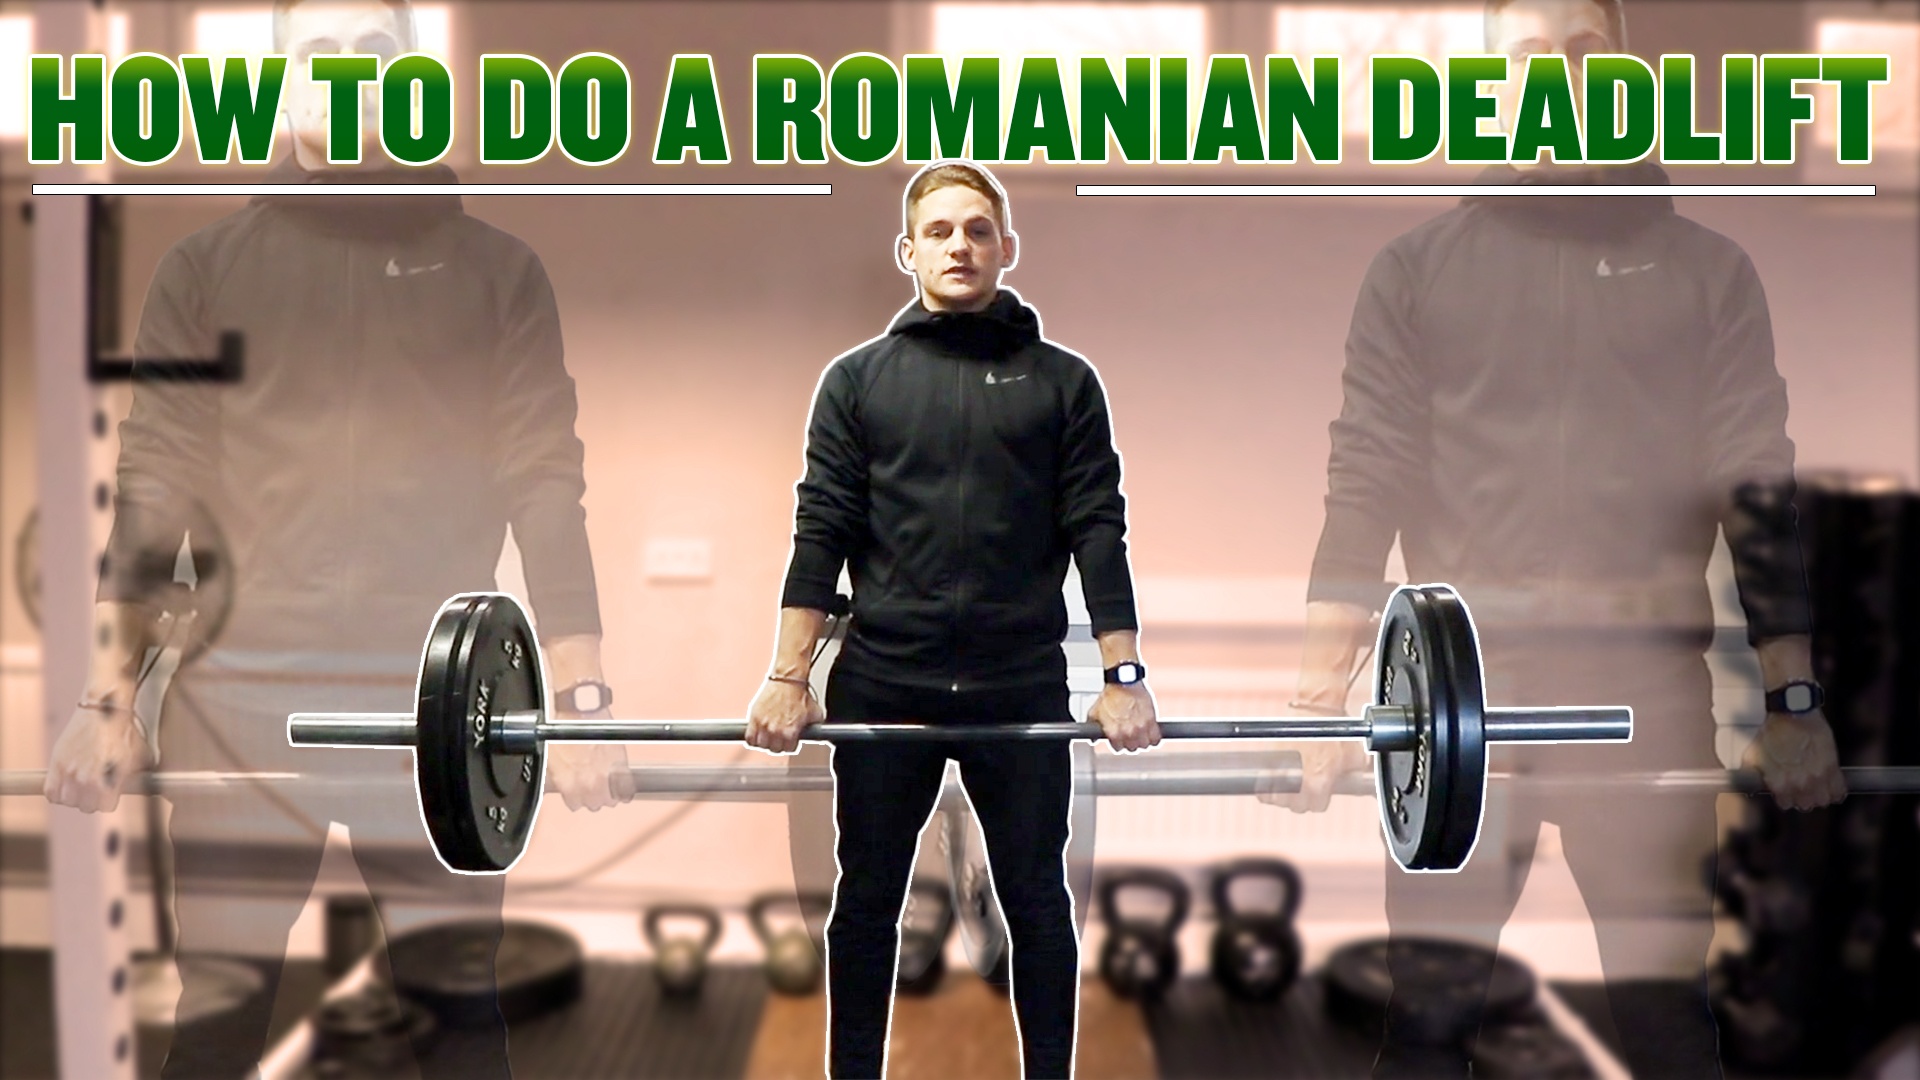 Romanian_deadlift-1.jpg